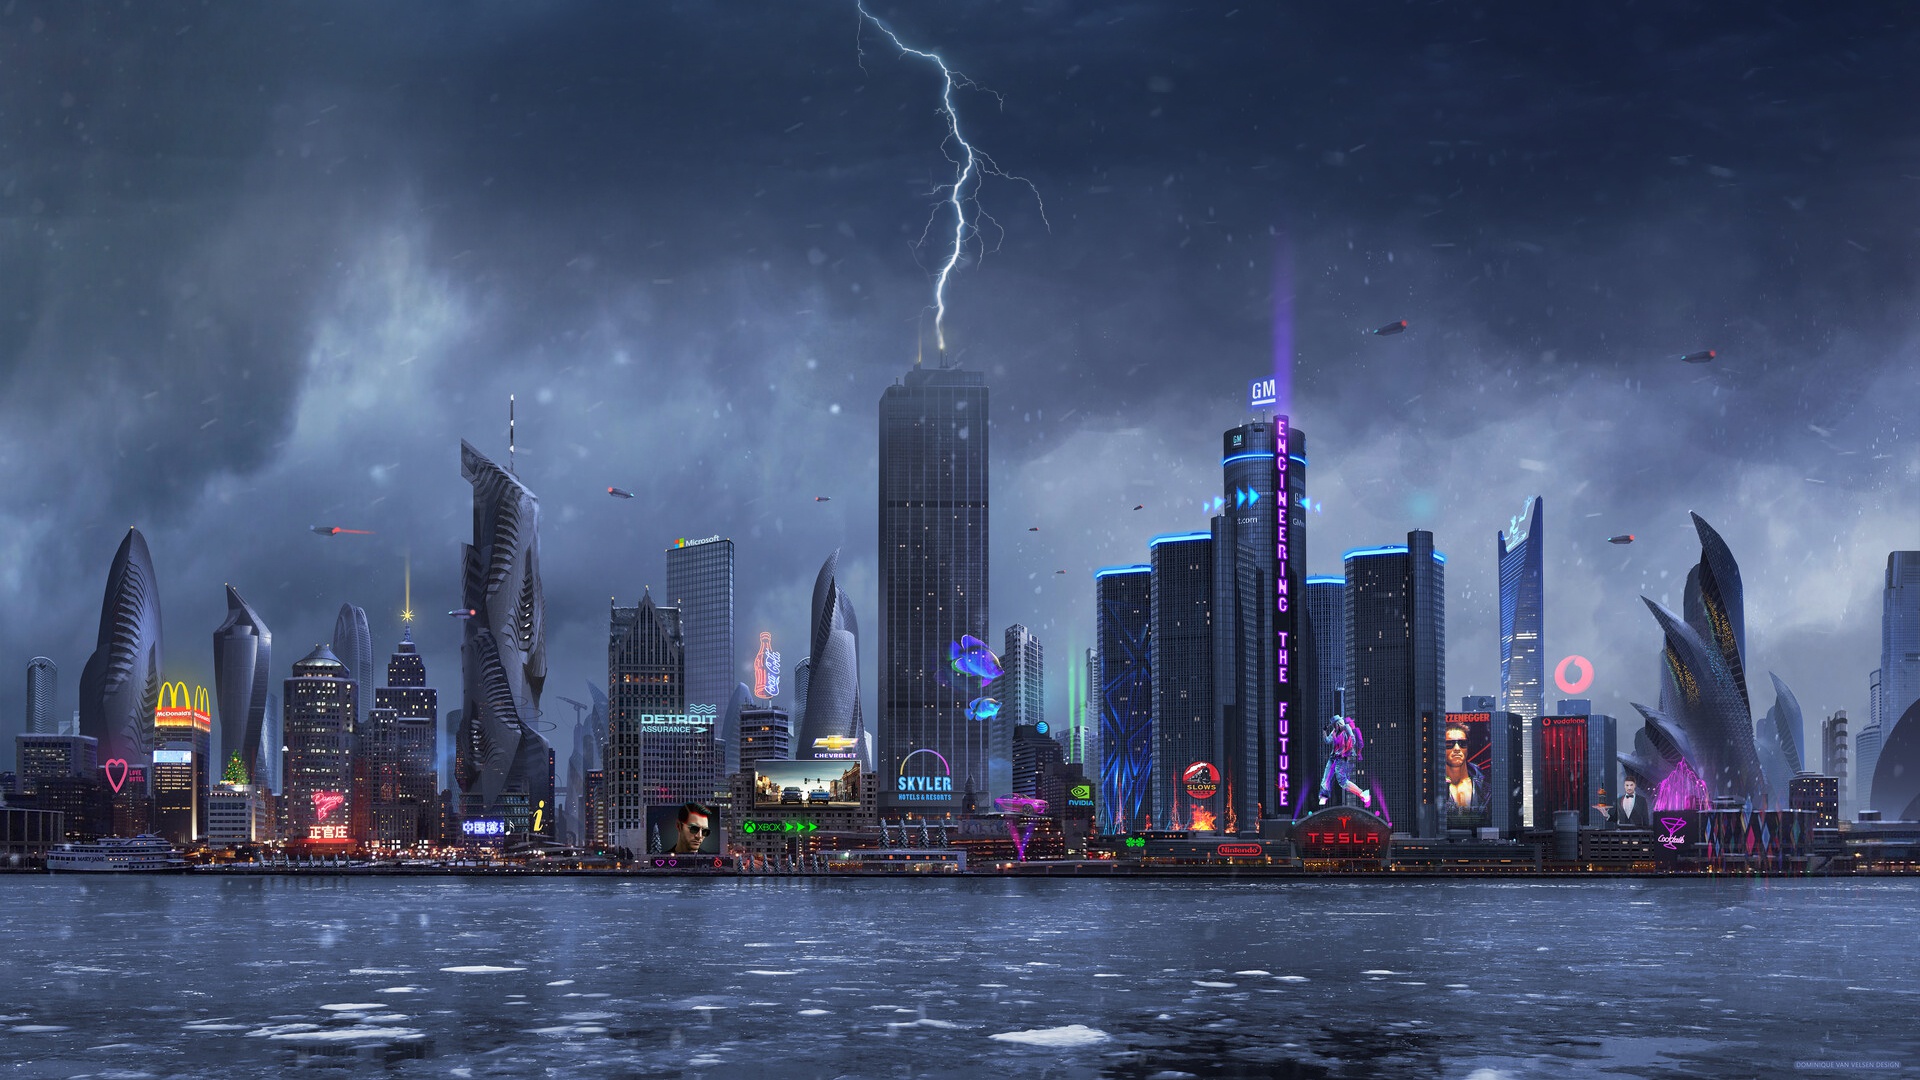 Futuristic Futuristic City Digital Art Cityscape Cyberpunk Terminator Water Lightning McDonalds 1920x1080